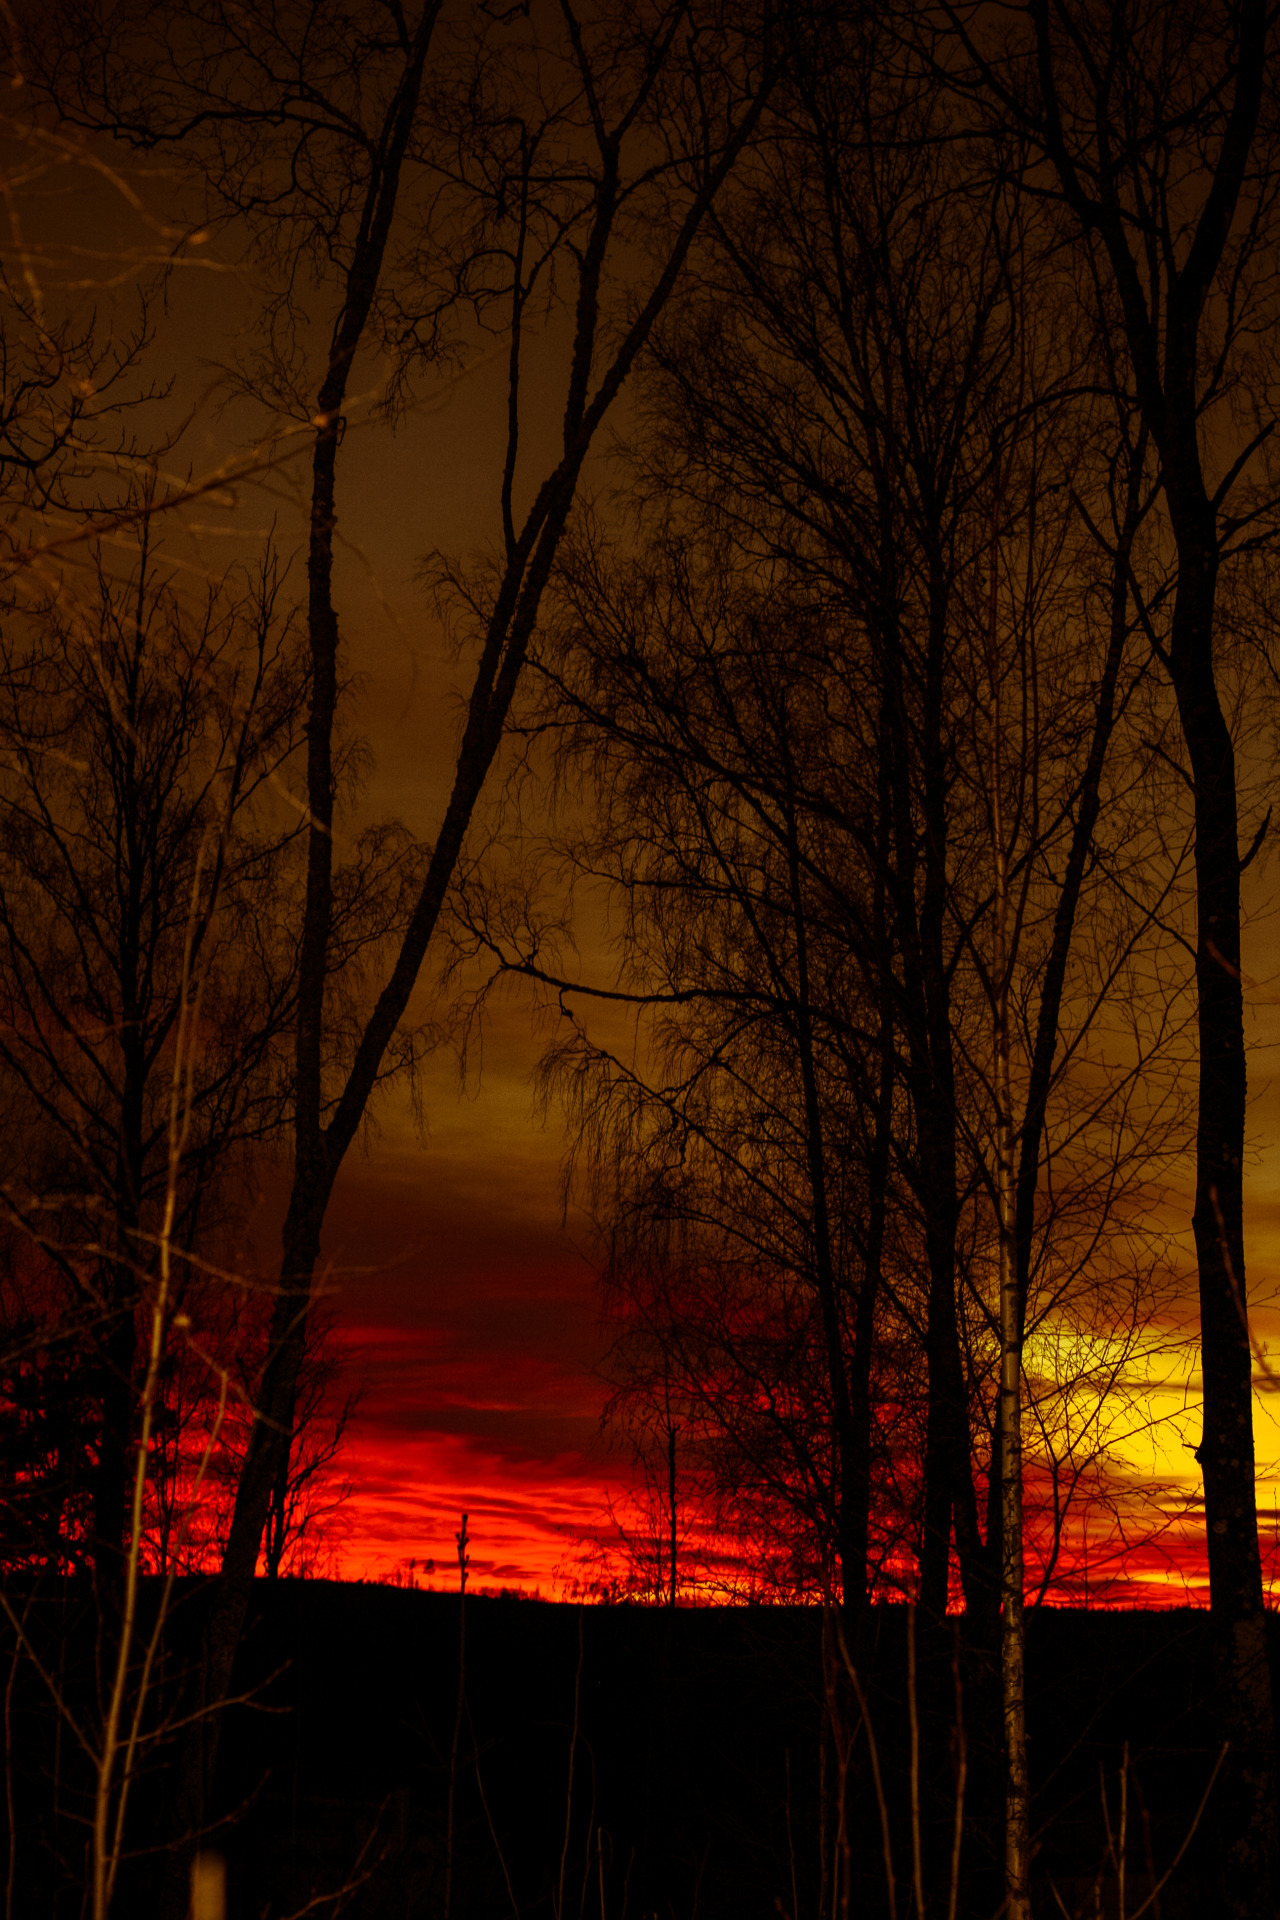 #nature#sunset#landscape#sky #photographers on tumblr  #artists on tumblr #lensblr#vertical nature#trees#january 2022#orange#red